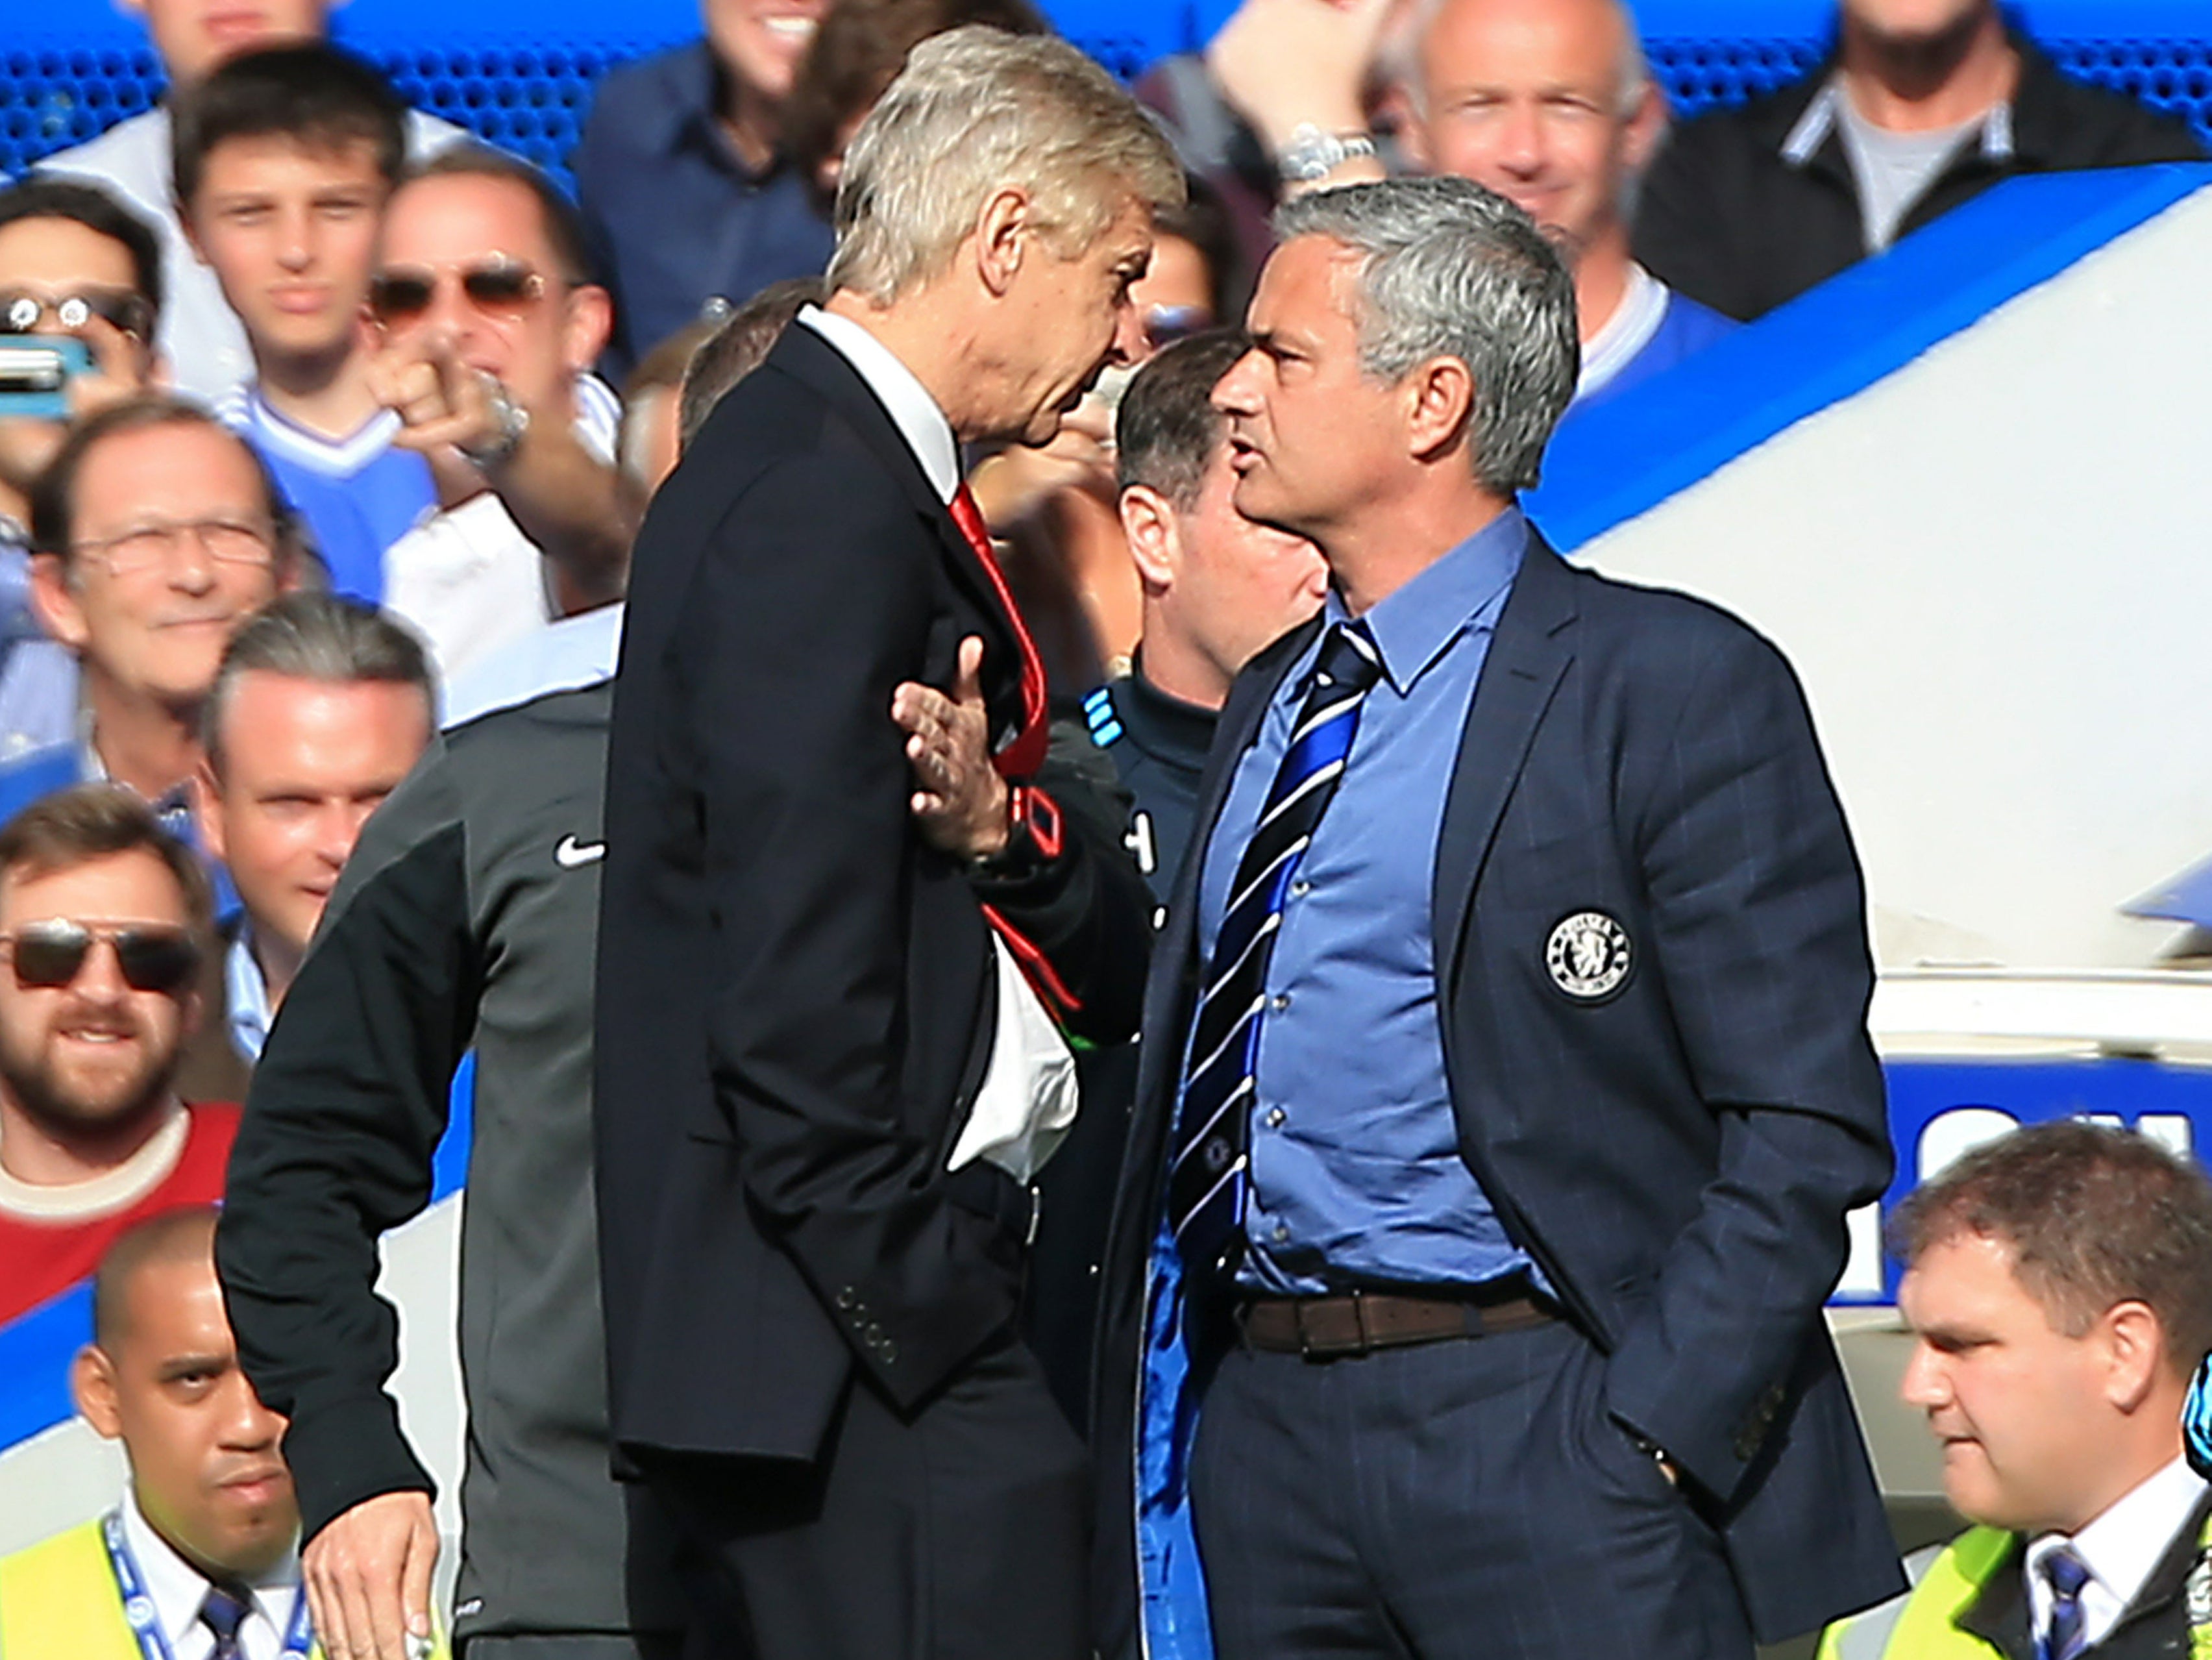 Jose Mourinho and Arsene Wenger went head to head